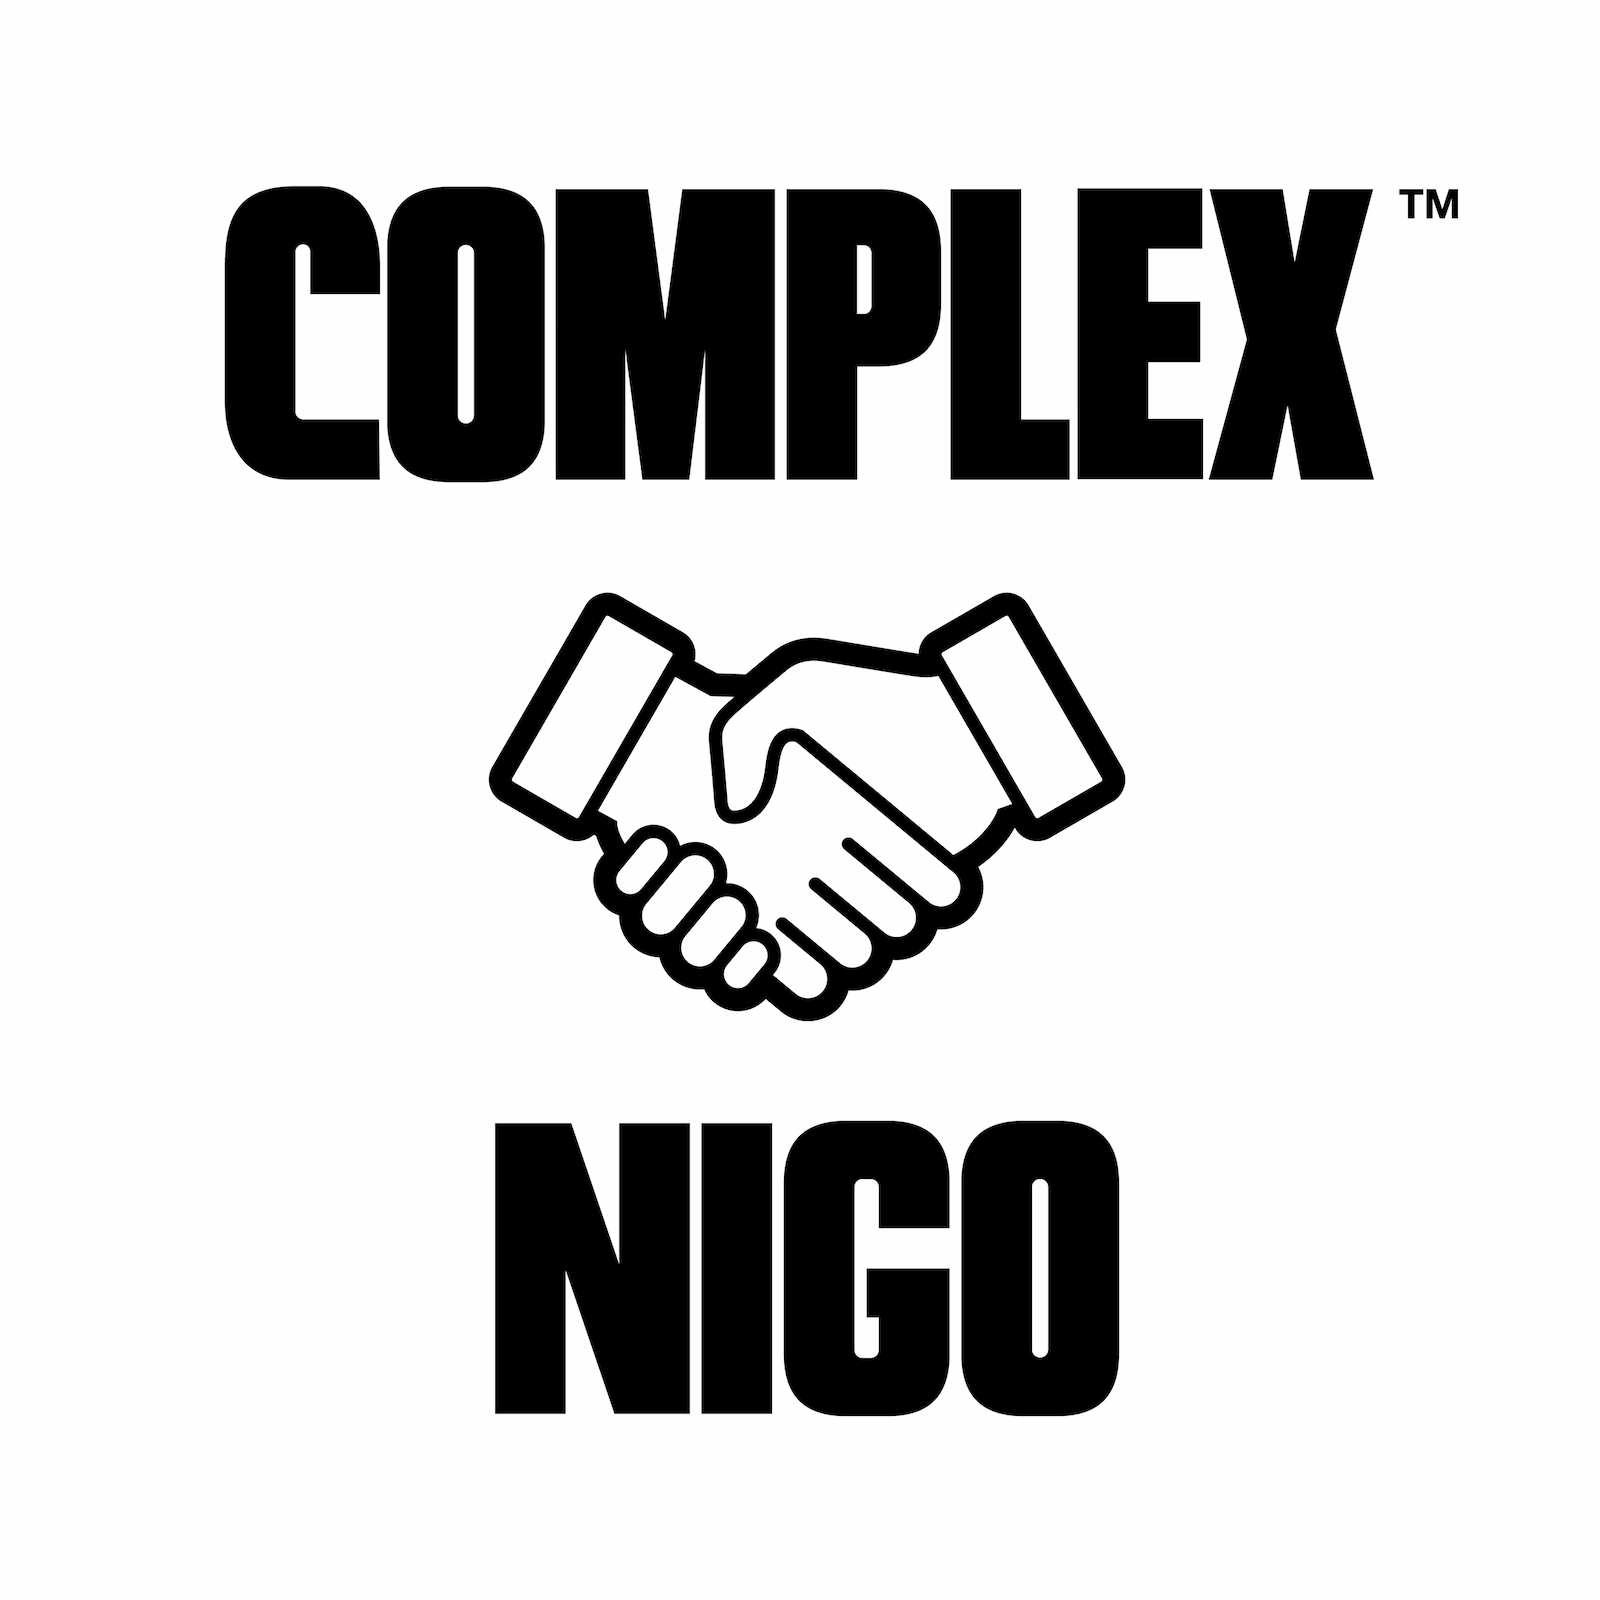 NIGO designs new logo and artwork for Complex’s 20th anniversary